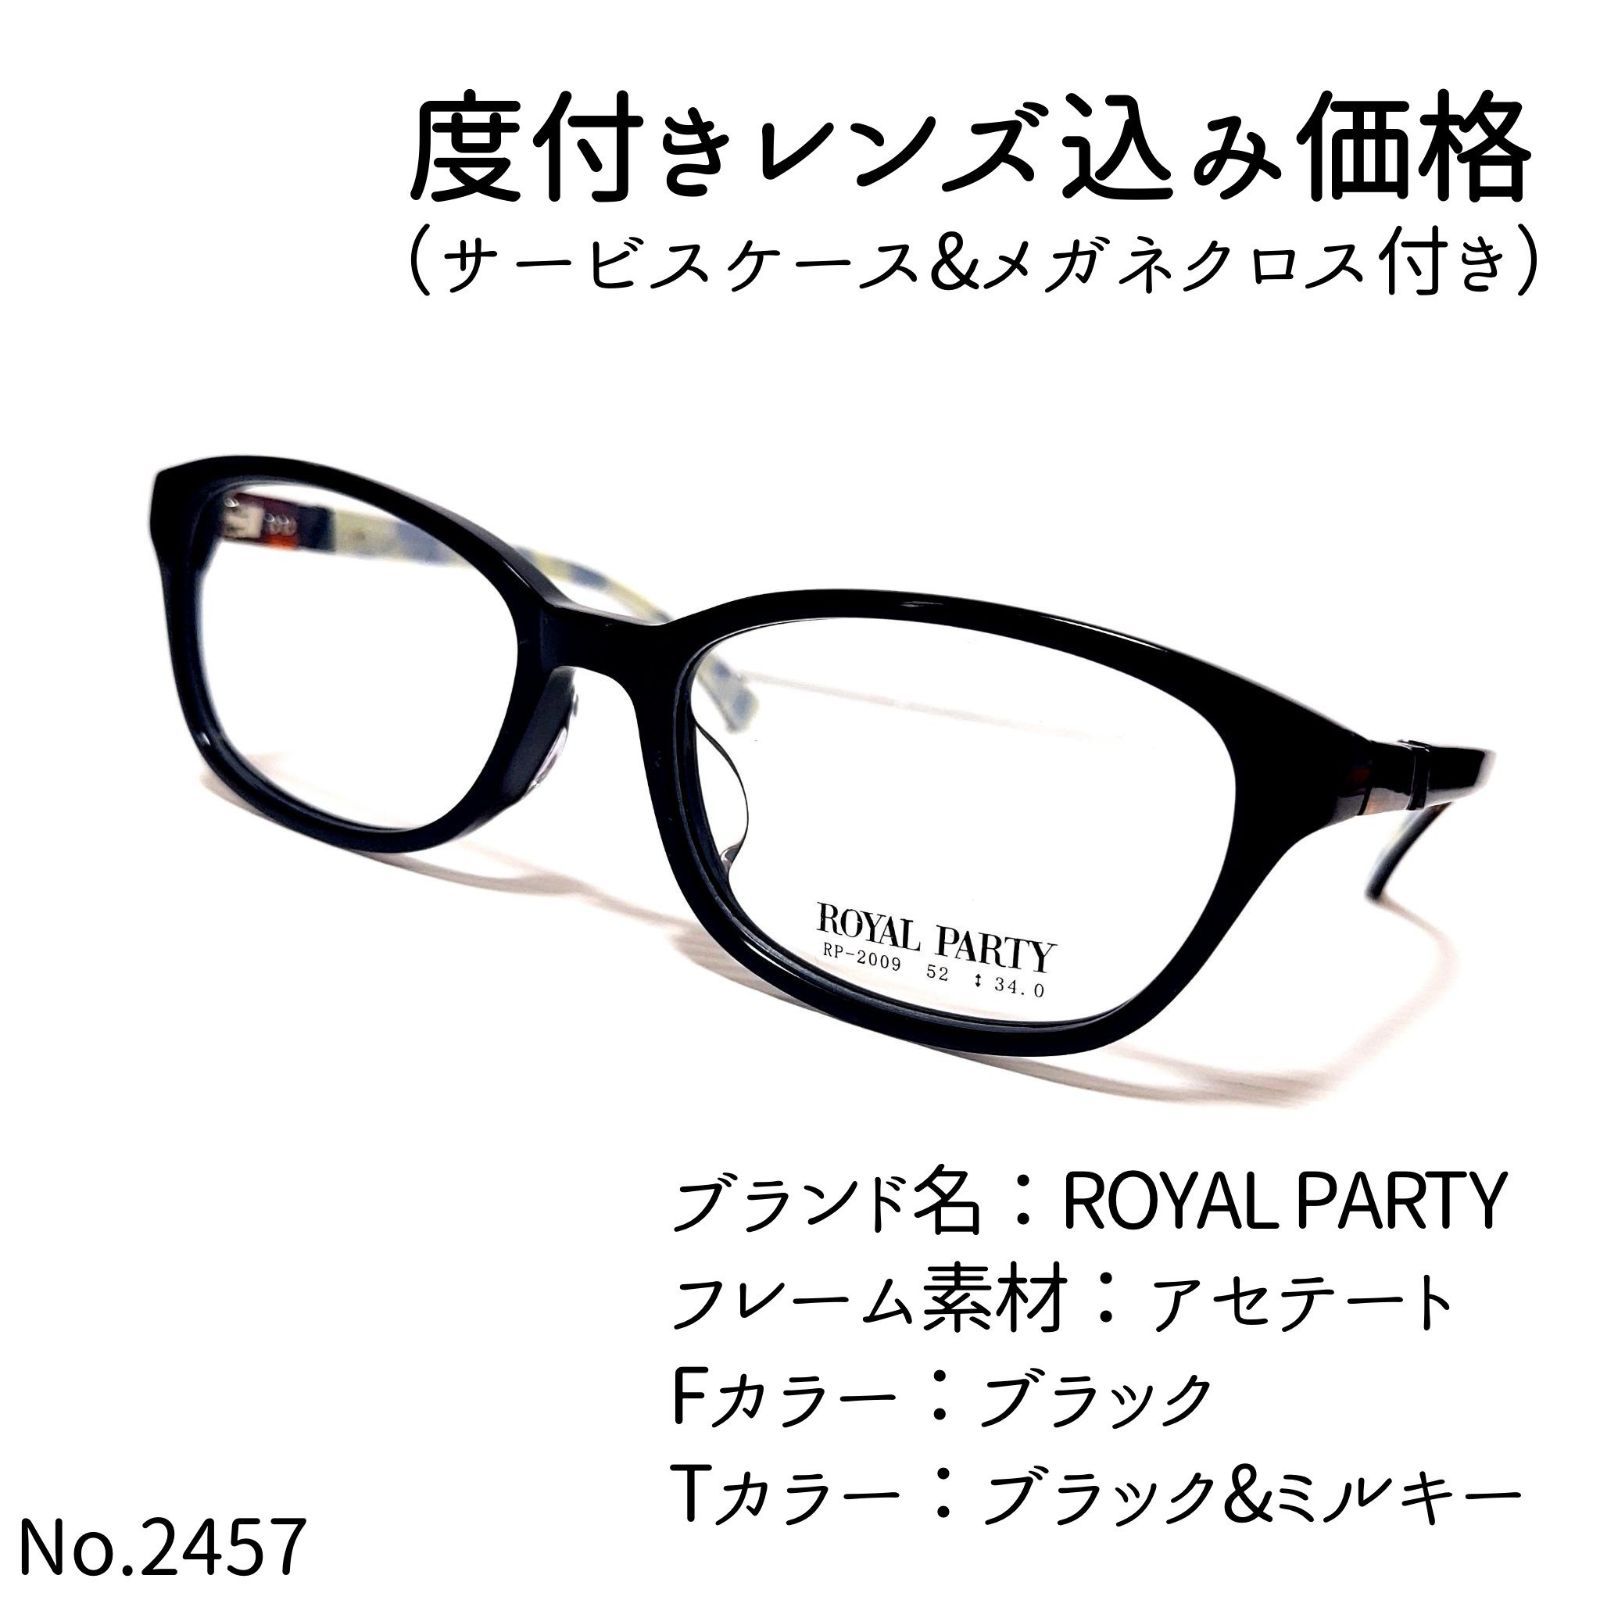 No.2457メガネ ROYAL PARTY【度数入り込み価格】 - スッキリ生活専門店